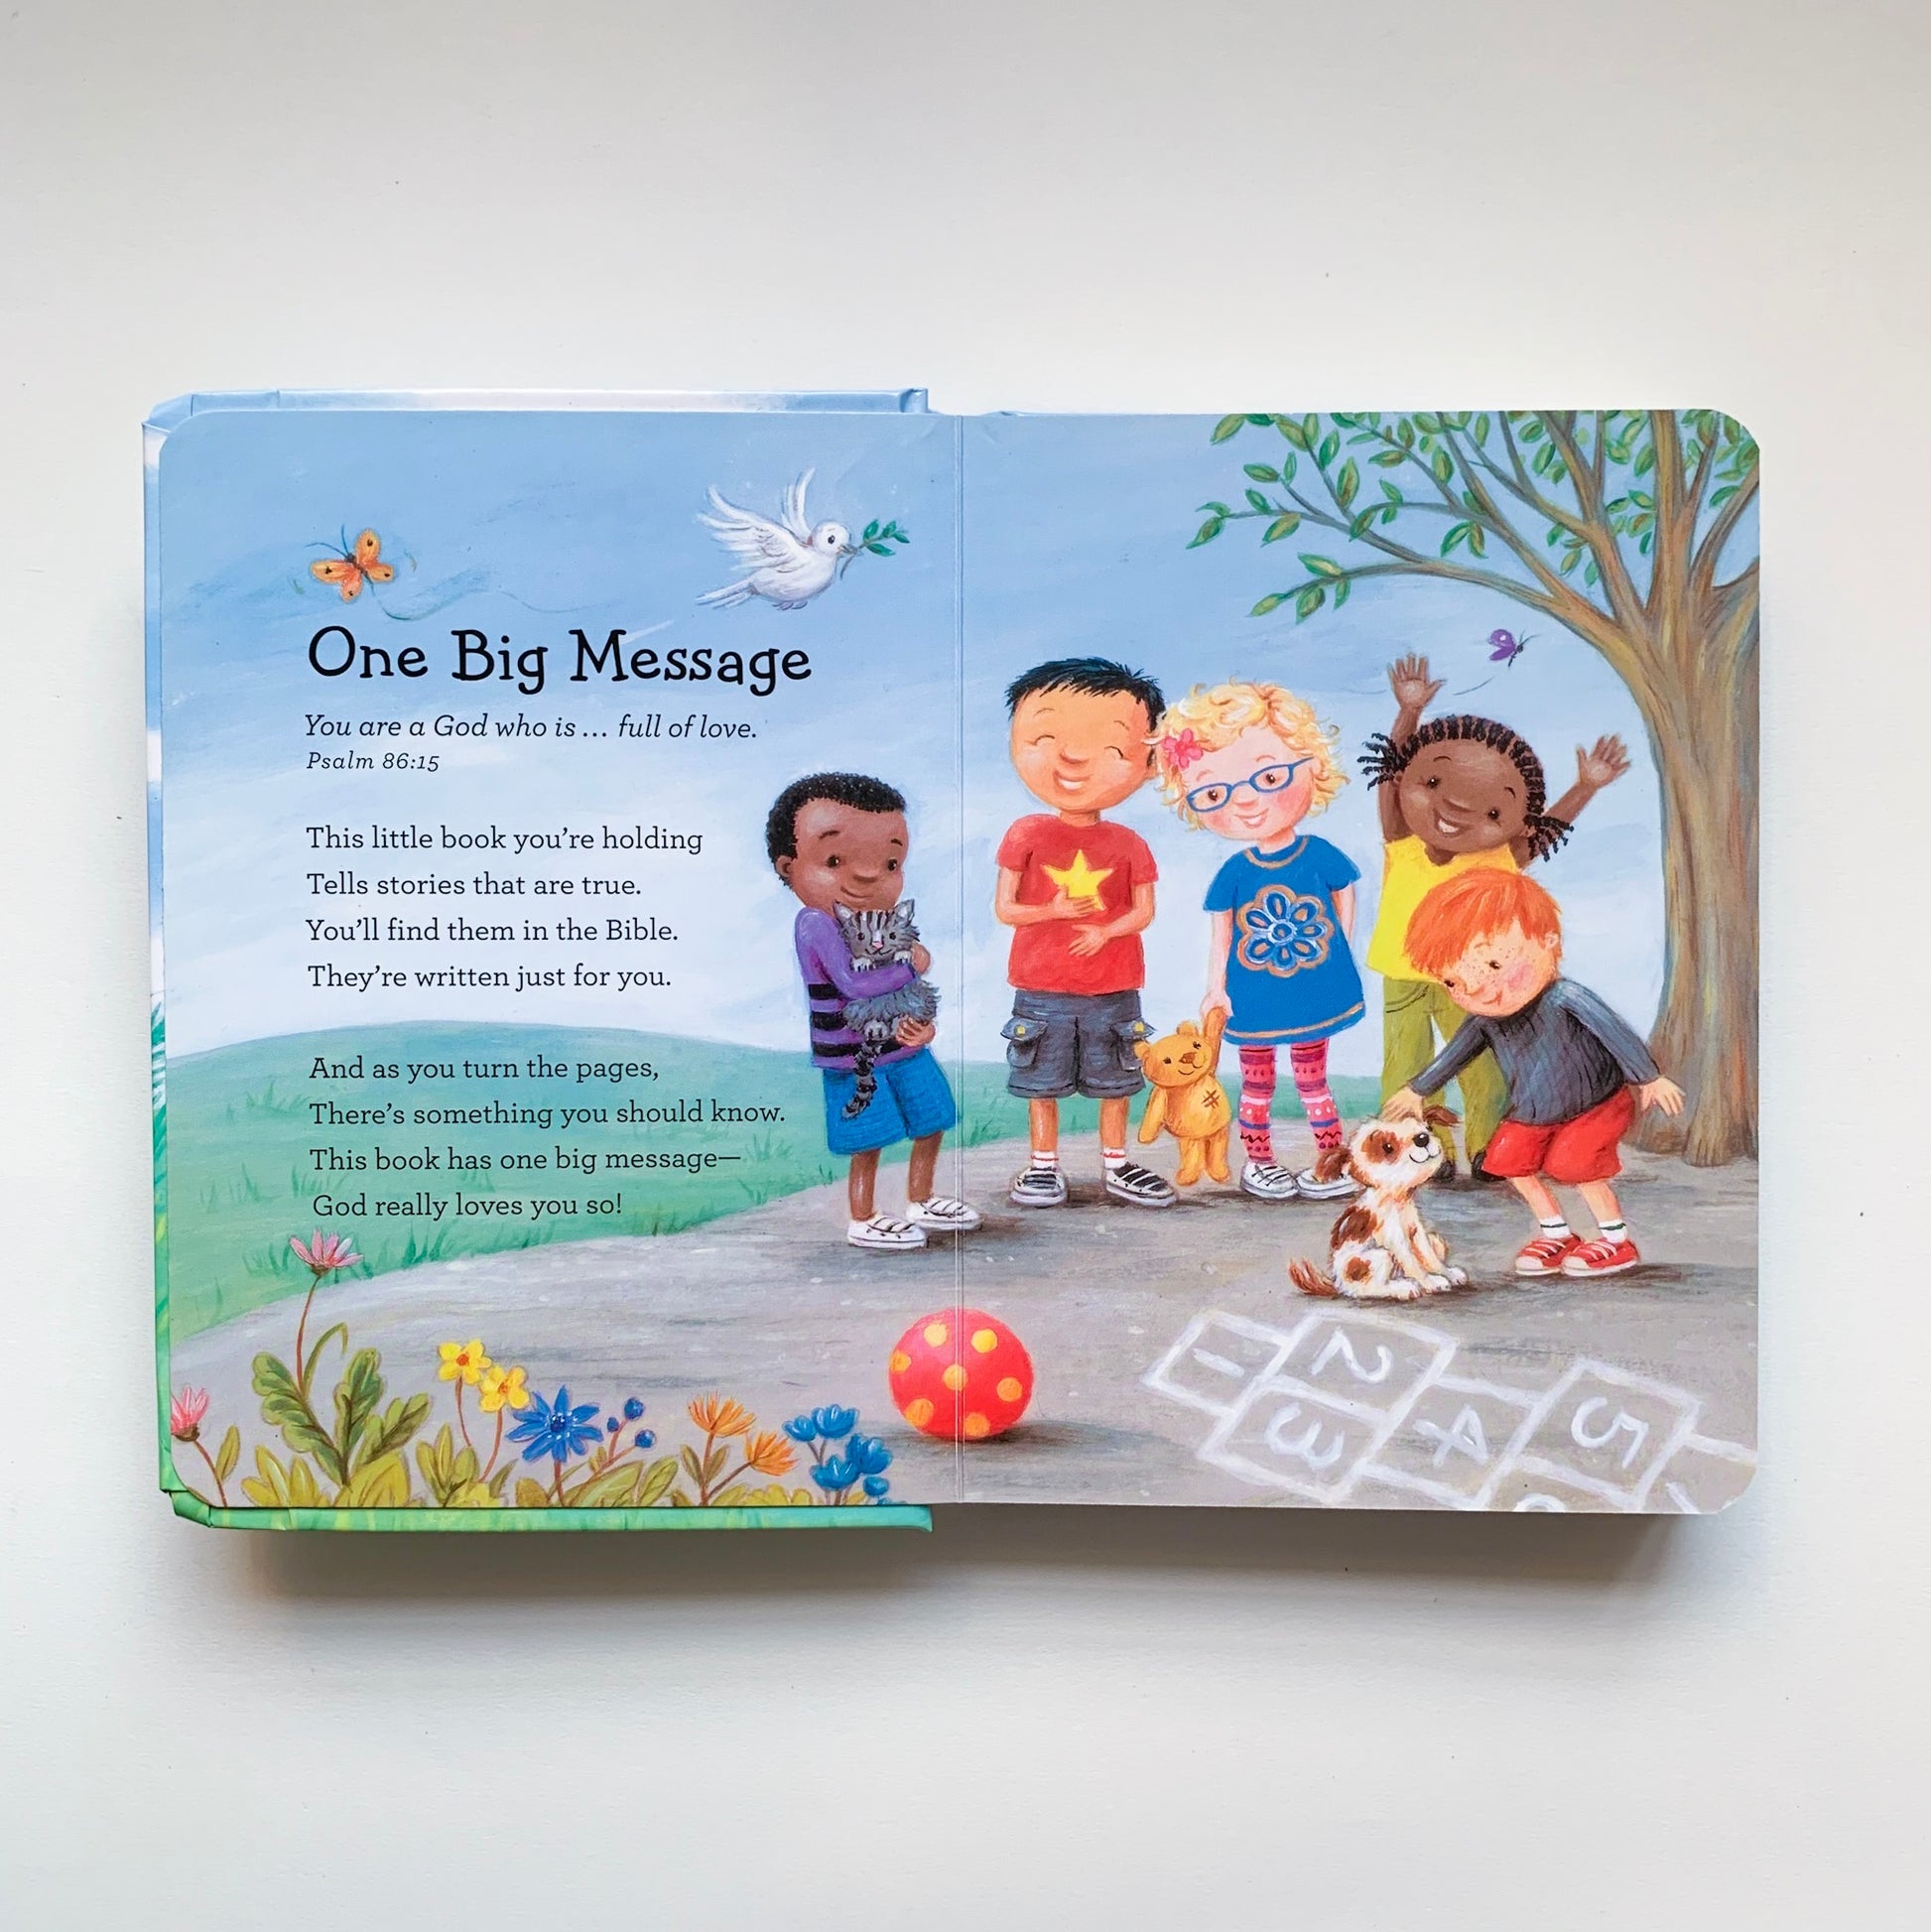 Snuggle Time Bible Stories - tiny-seeds-bookshop-christian-books-for-kids